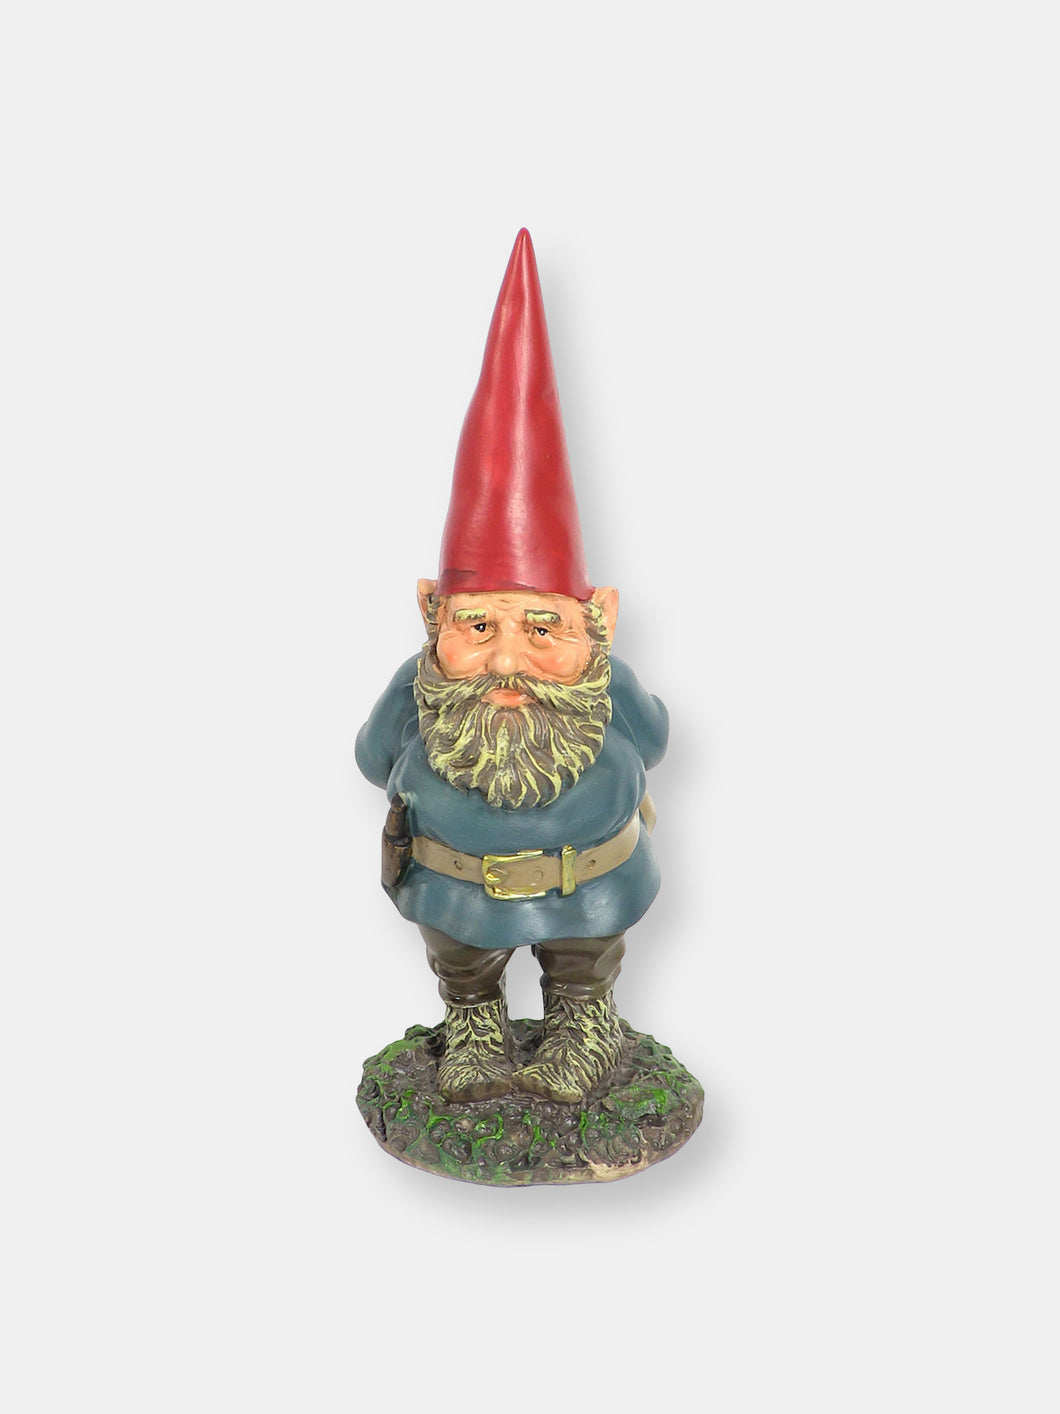 Gus the Original Gnome Statue - Outdoor Lawn and Garden Decor - 9.5